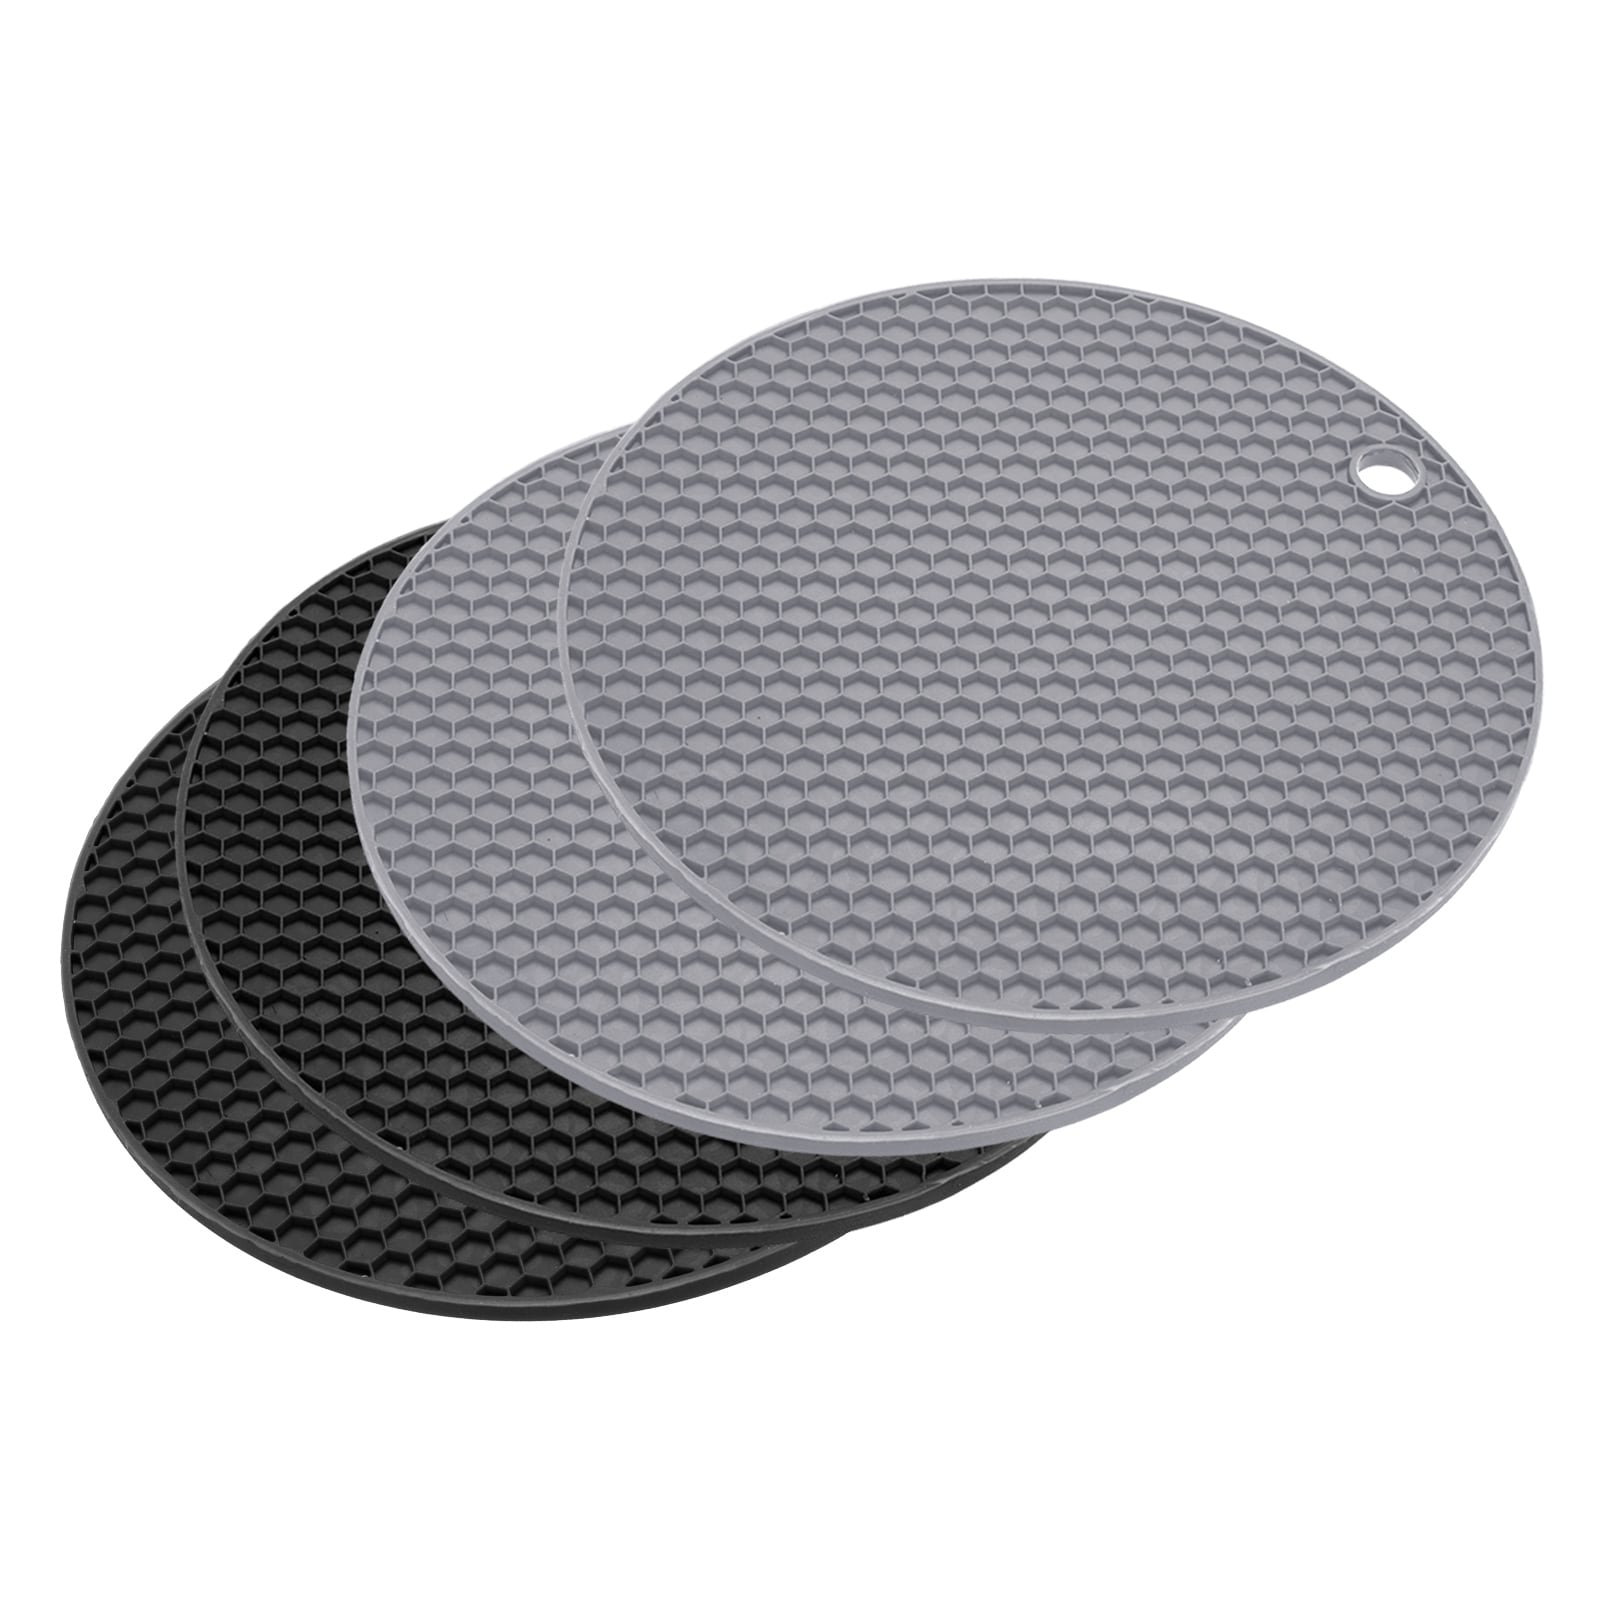 https://ak1.ostkcdn.com/images/products/is/images/direct/6d52355c548d4b314493b688a7cd51dee1a17856/4pcs-Silicone-Table-Trivet-Mat-Non-Slip-Heat-Resistant-Pad-Black%2BLight-Grey.jpg